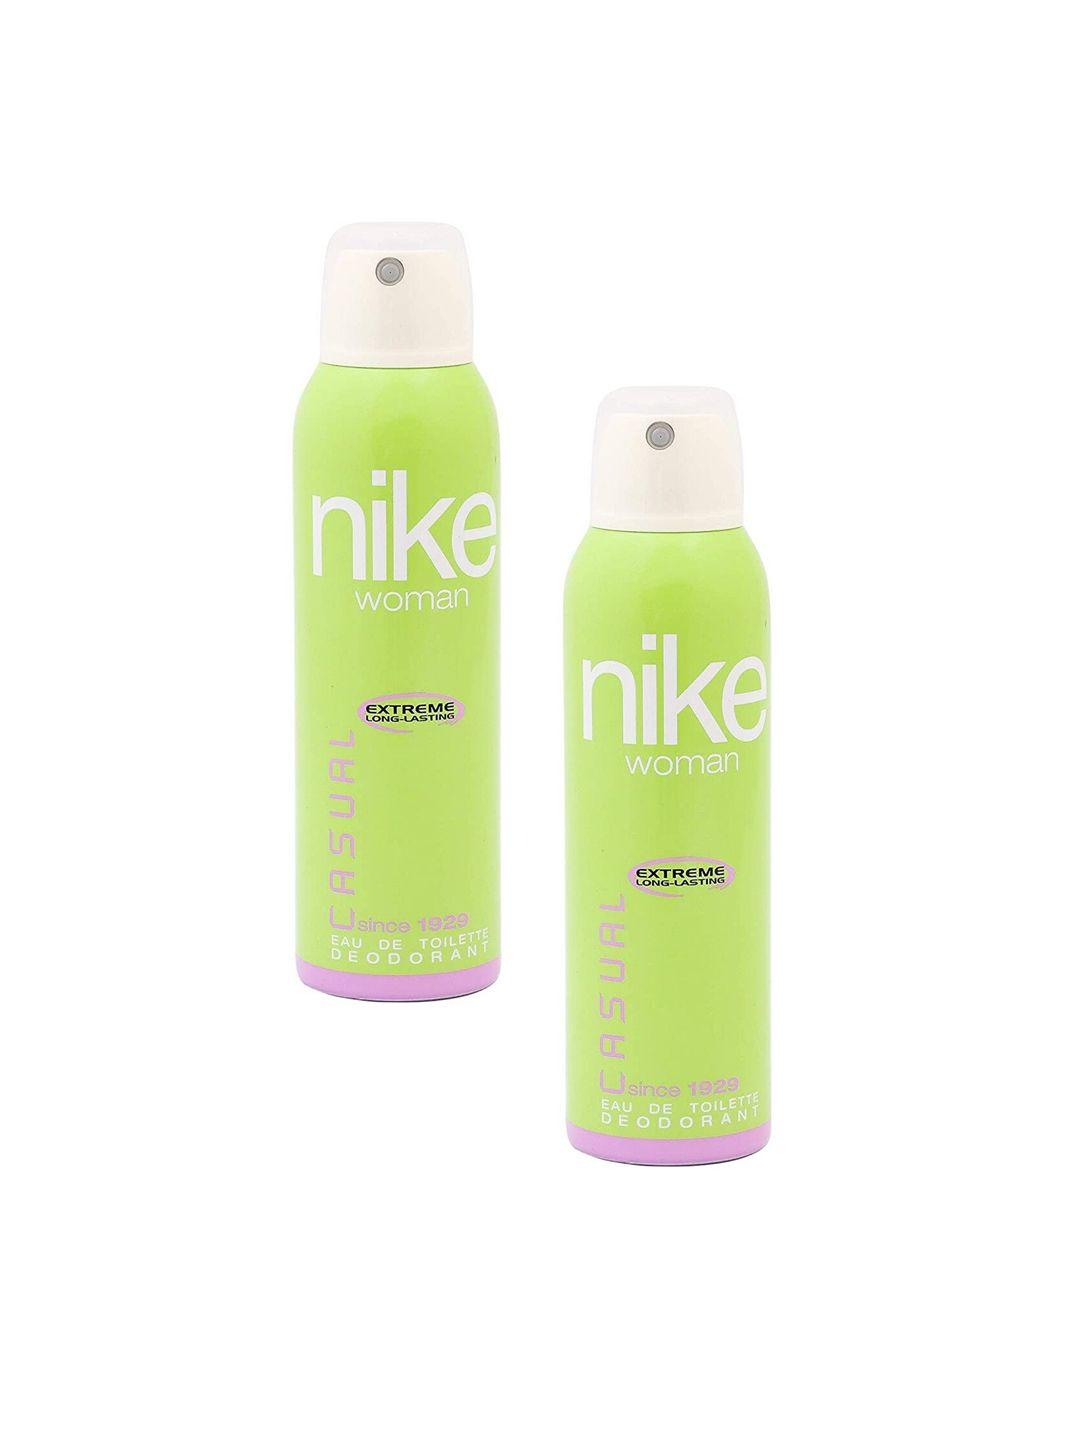 nike pack of 2 woman casual deodorant- 200ml each